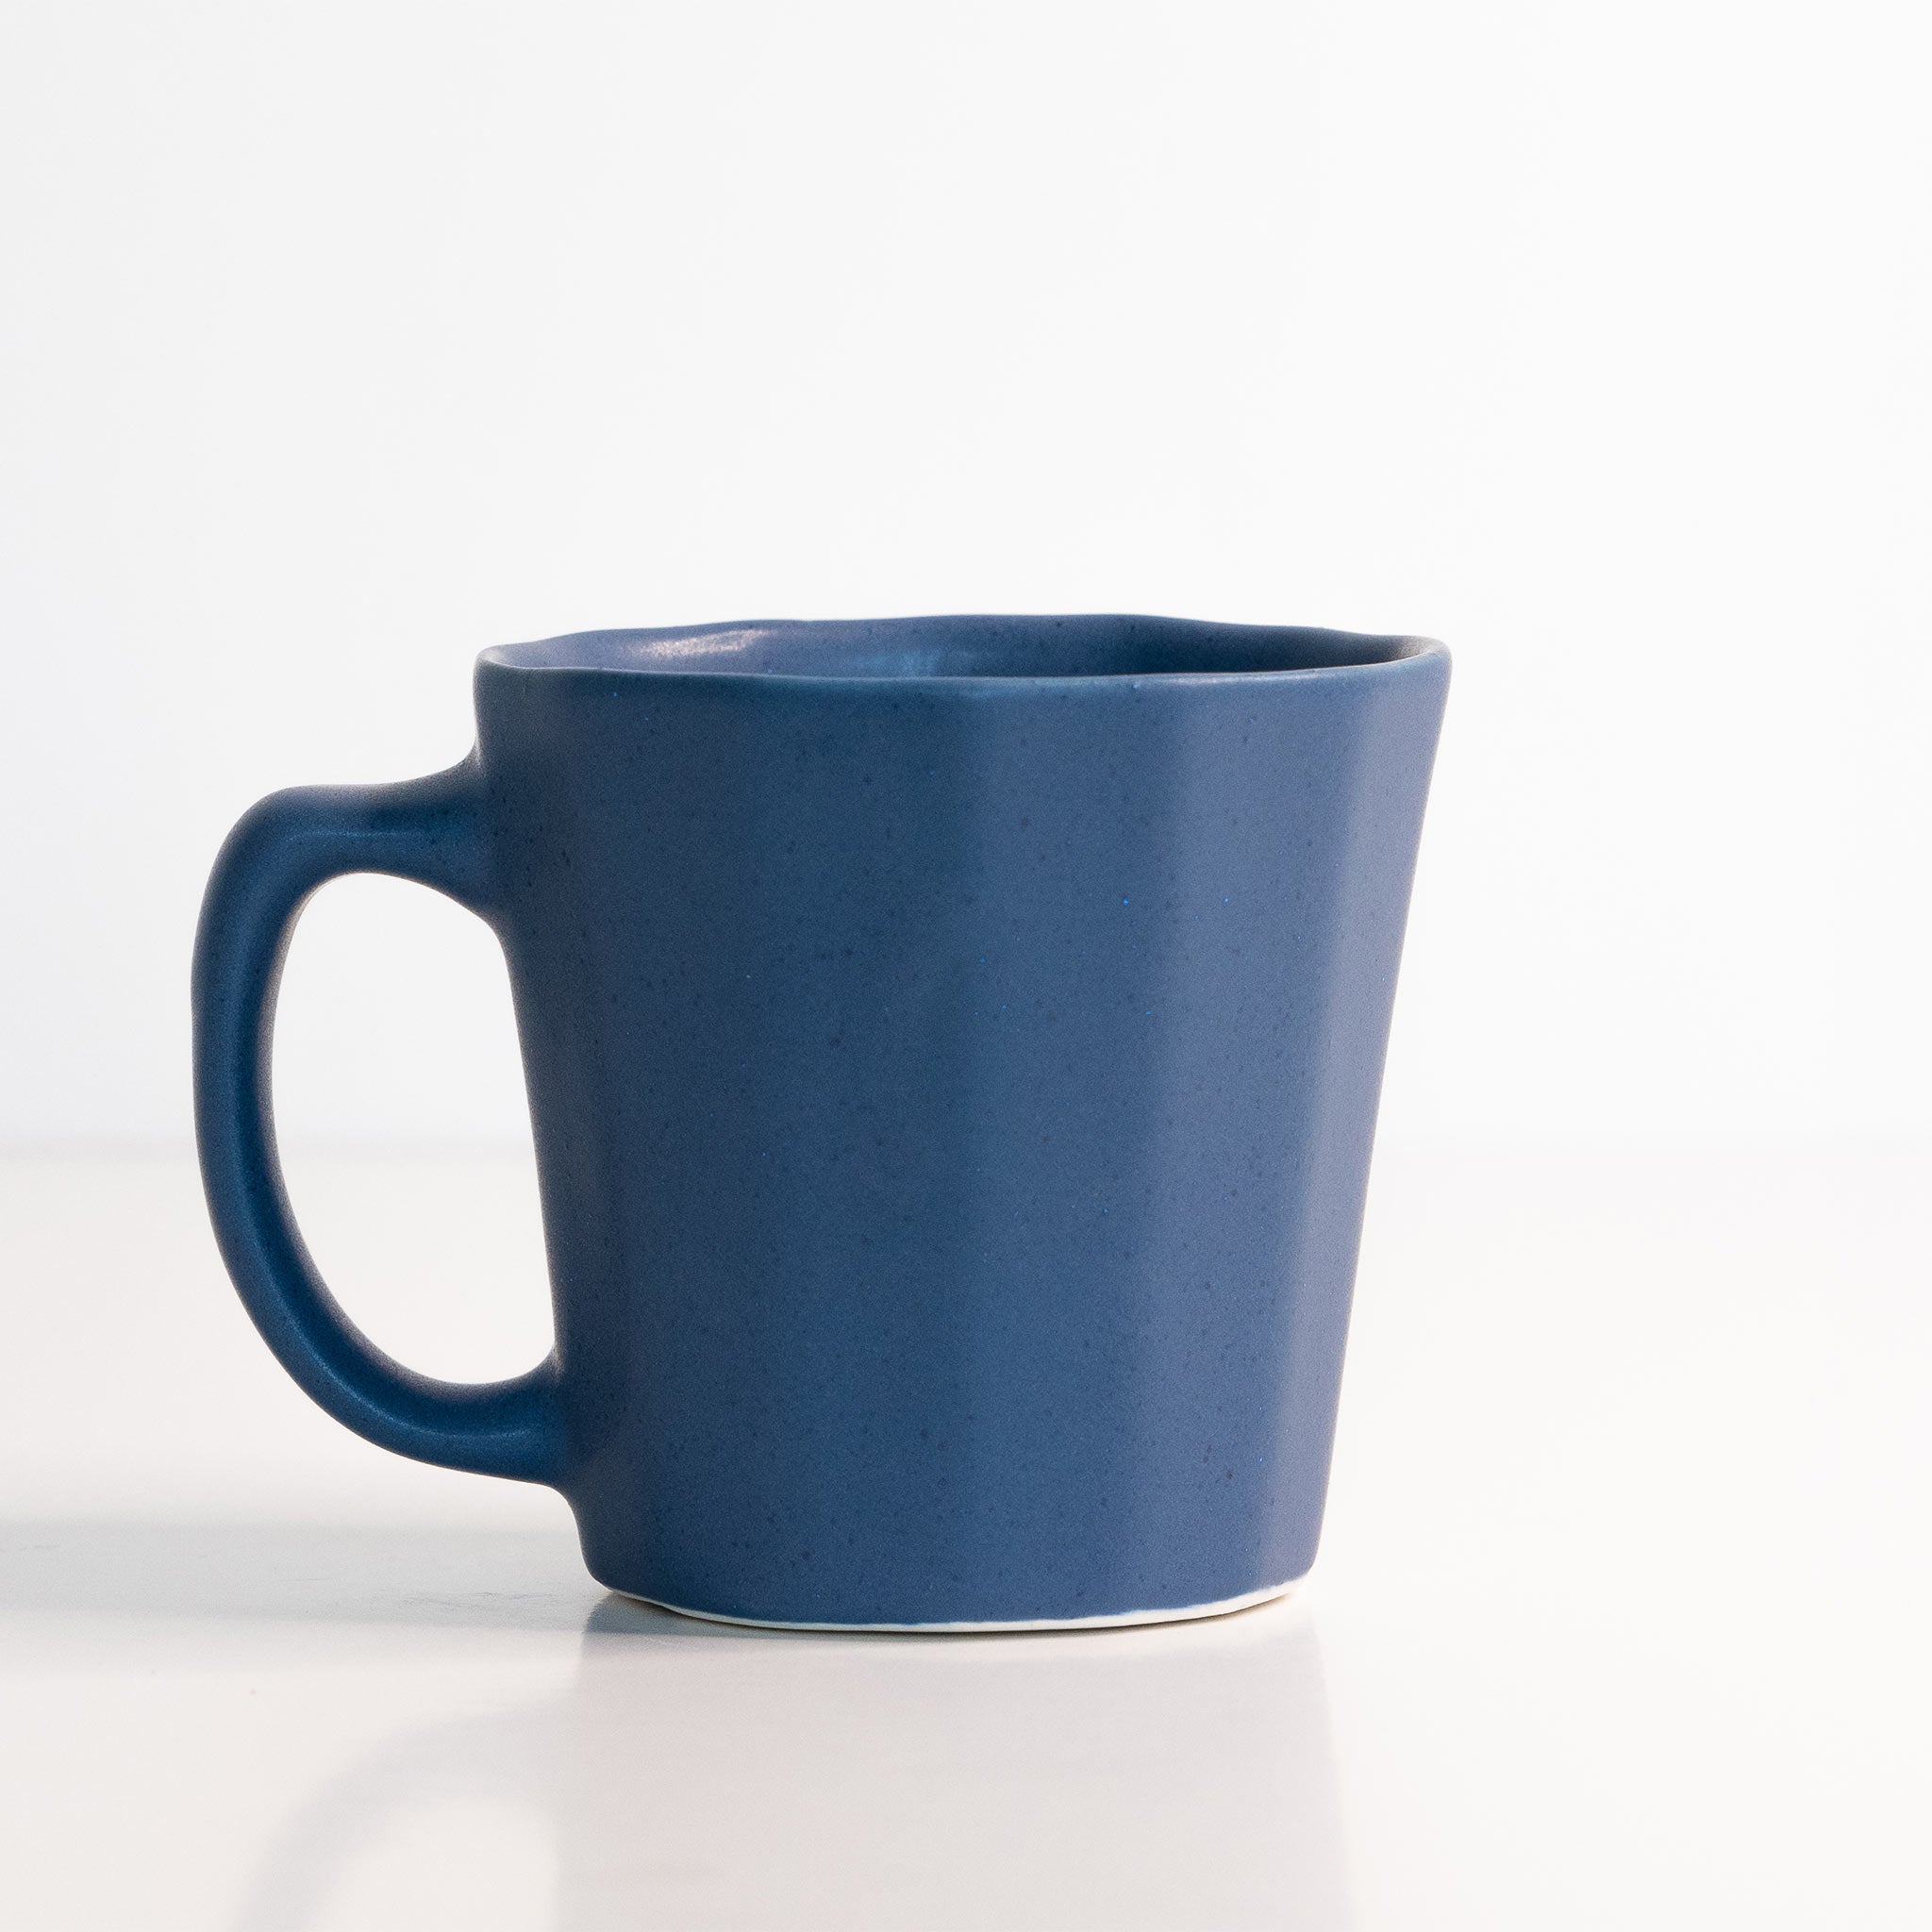 Monday Mug - Handmade Porcelain Coffee Cup Pisgah Blue The Bright Angle